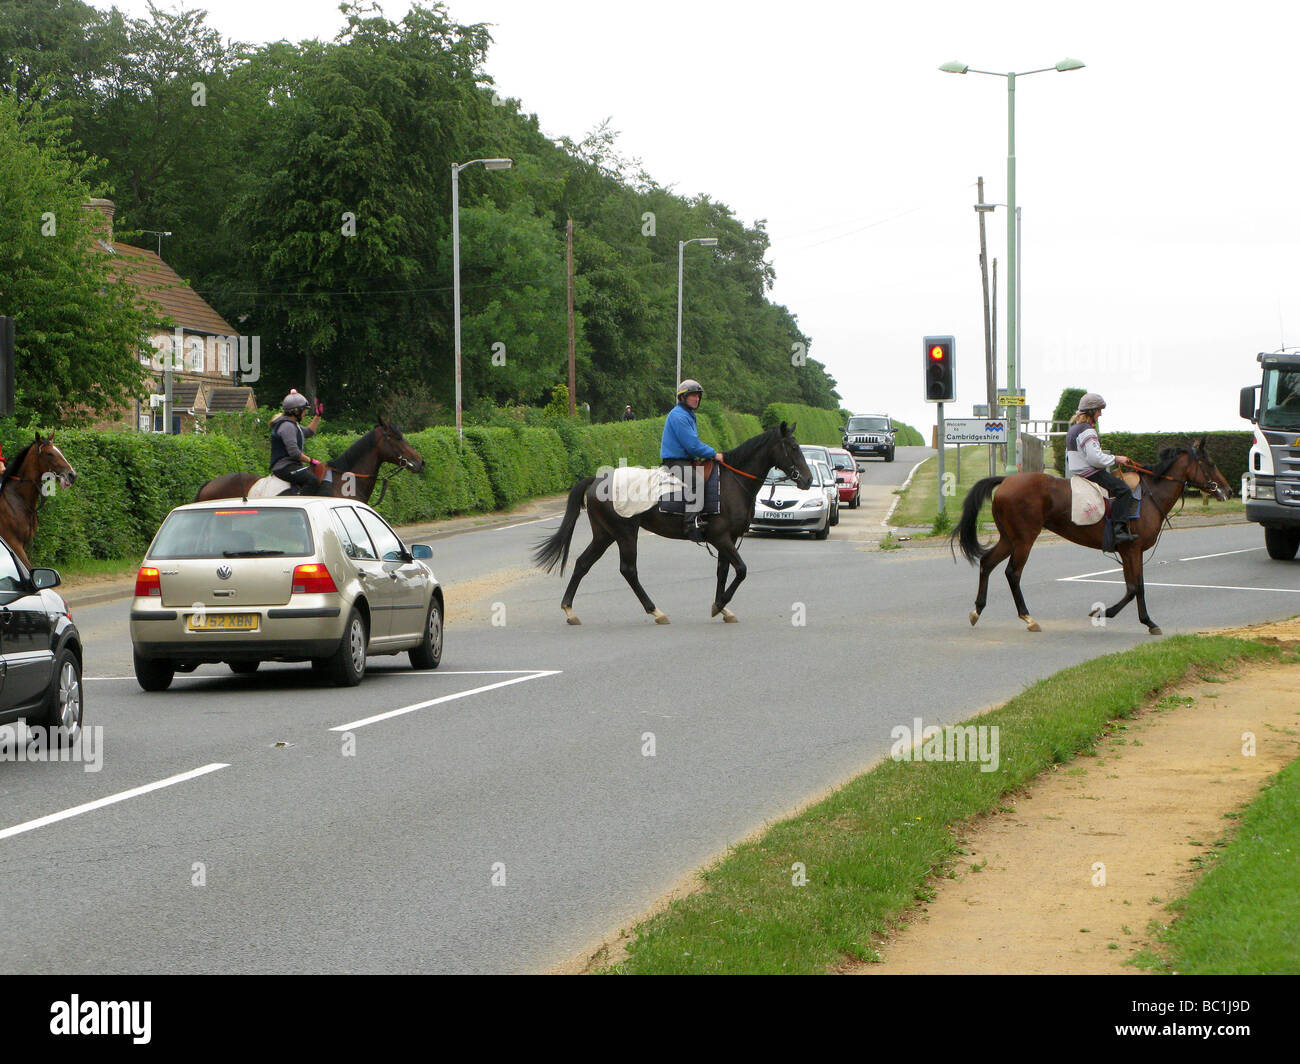 Tutto si ferma per i cavalli in Newmarket, sede dell'Horse Racing Industry di Inghilterra Foto Stock